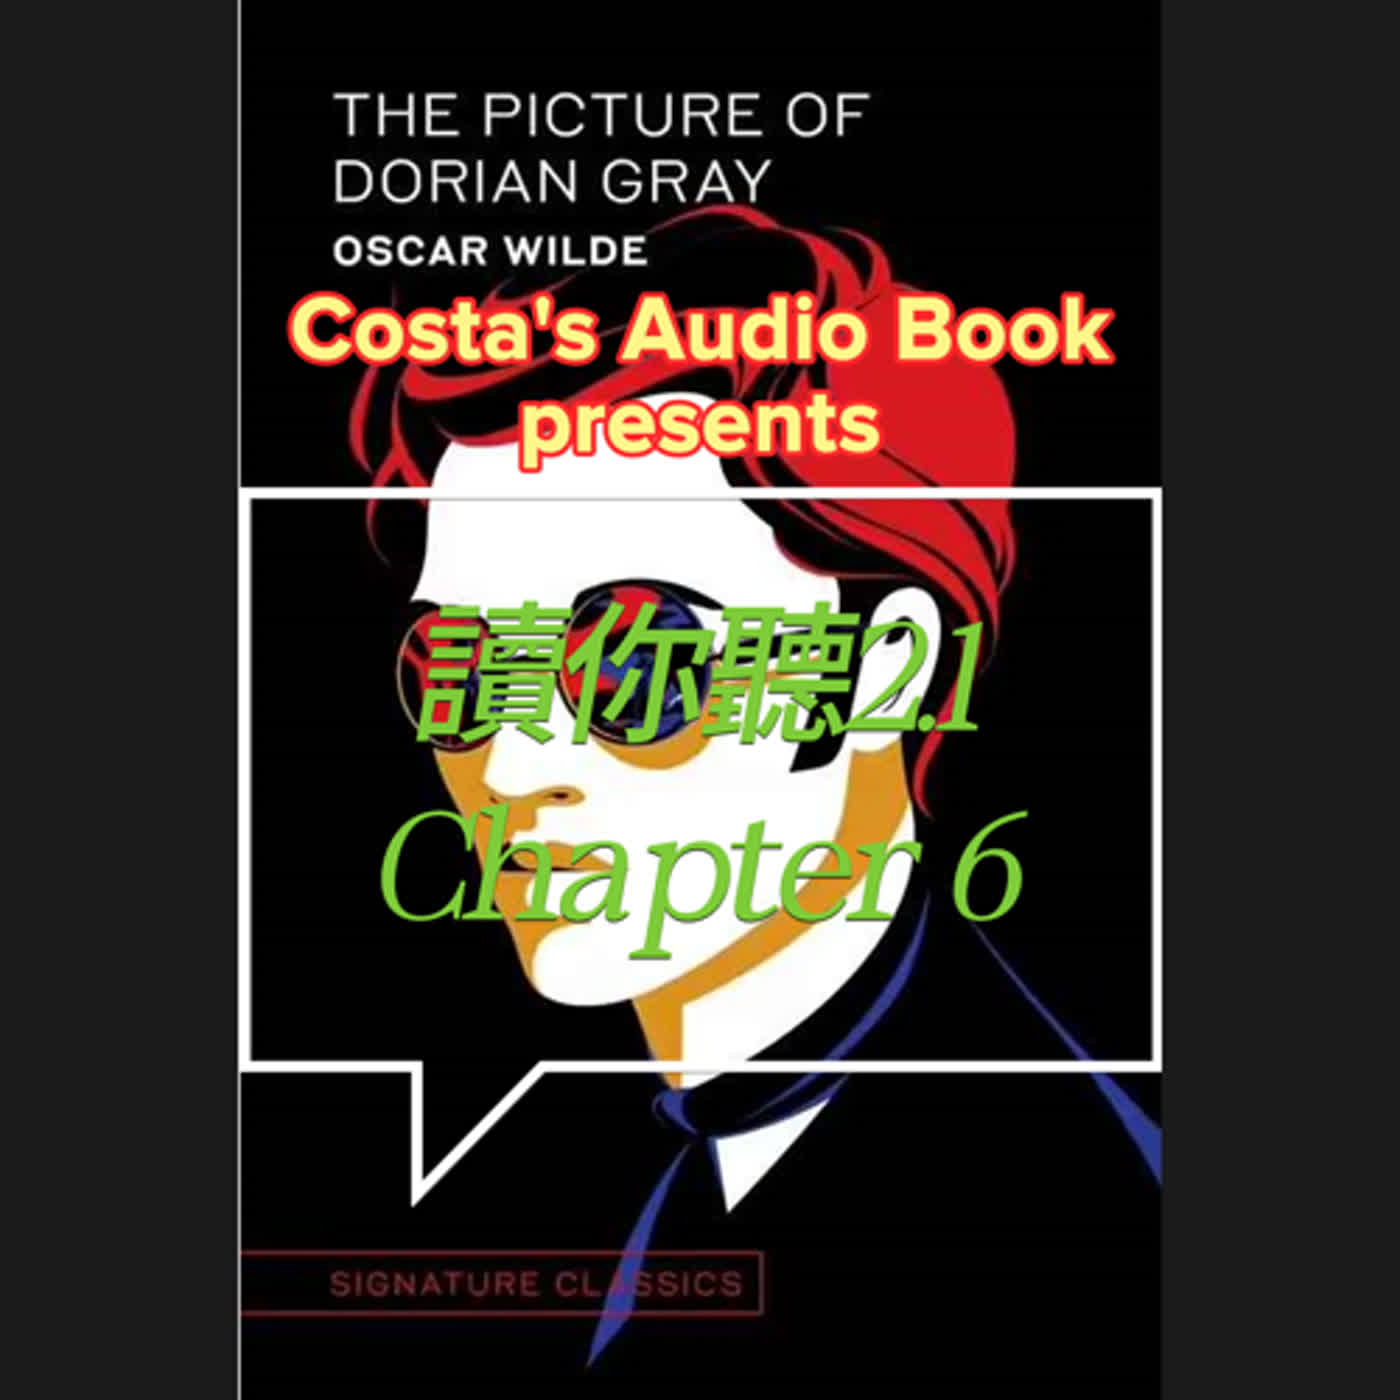 Costa's Audio Book: Oscar Wilde "The Picture of Dorian Gray" Chapter 6 讀你聽2.1《道林格雷的畫像》